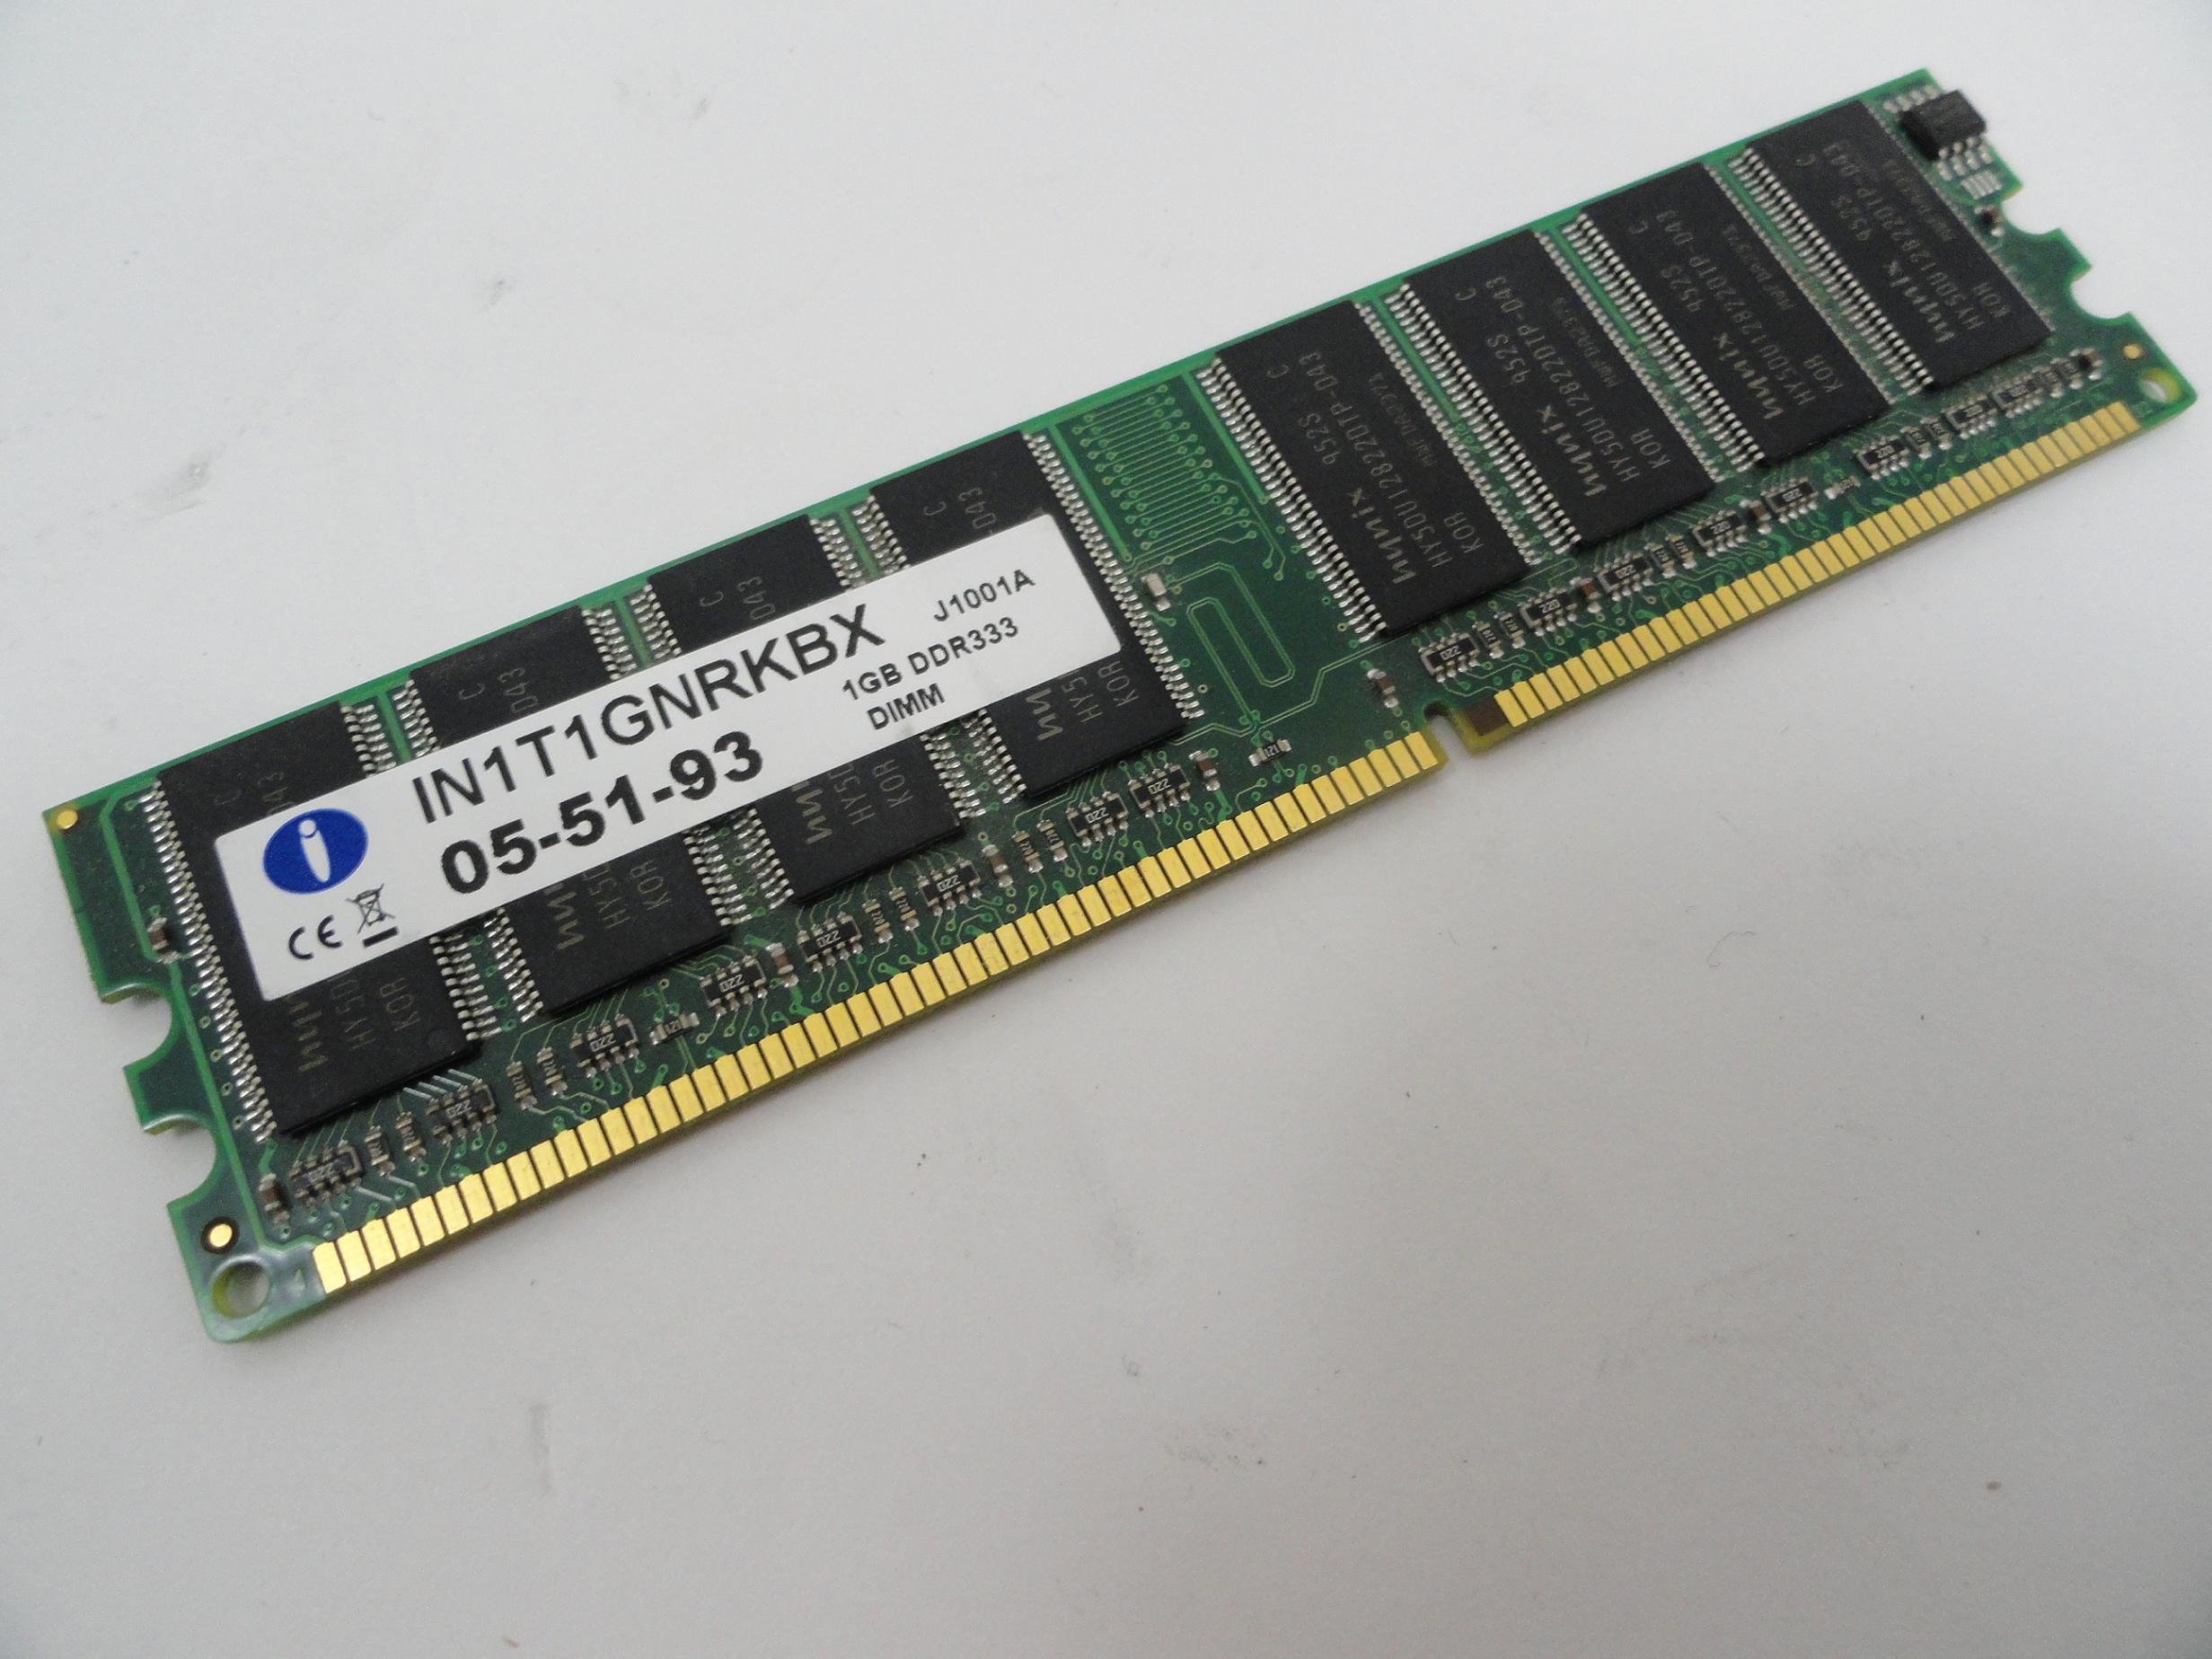 PR16352_IN1T1GNRKBX_Integral 1GB PC-2700 DDR333 DIMM RAM - Image2